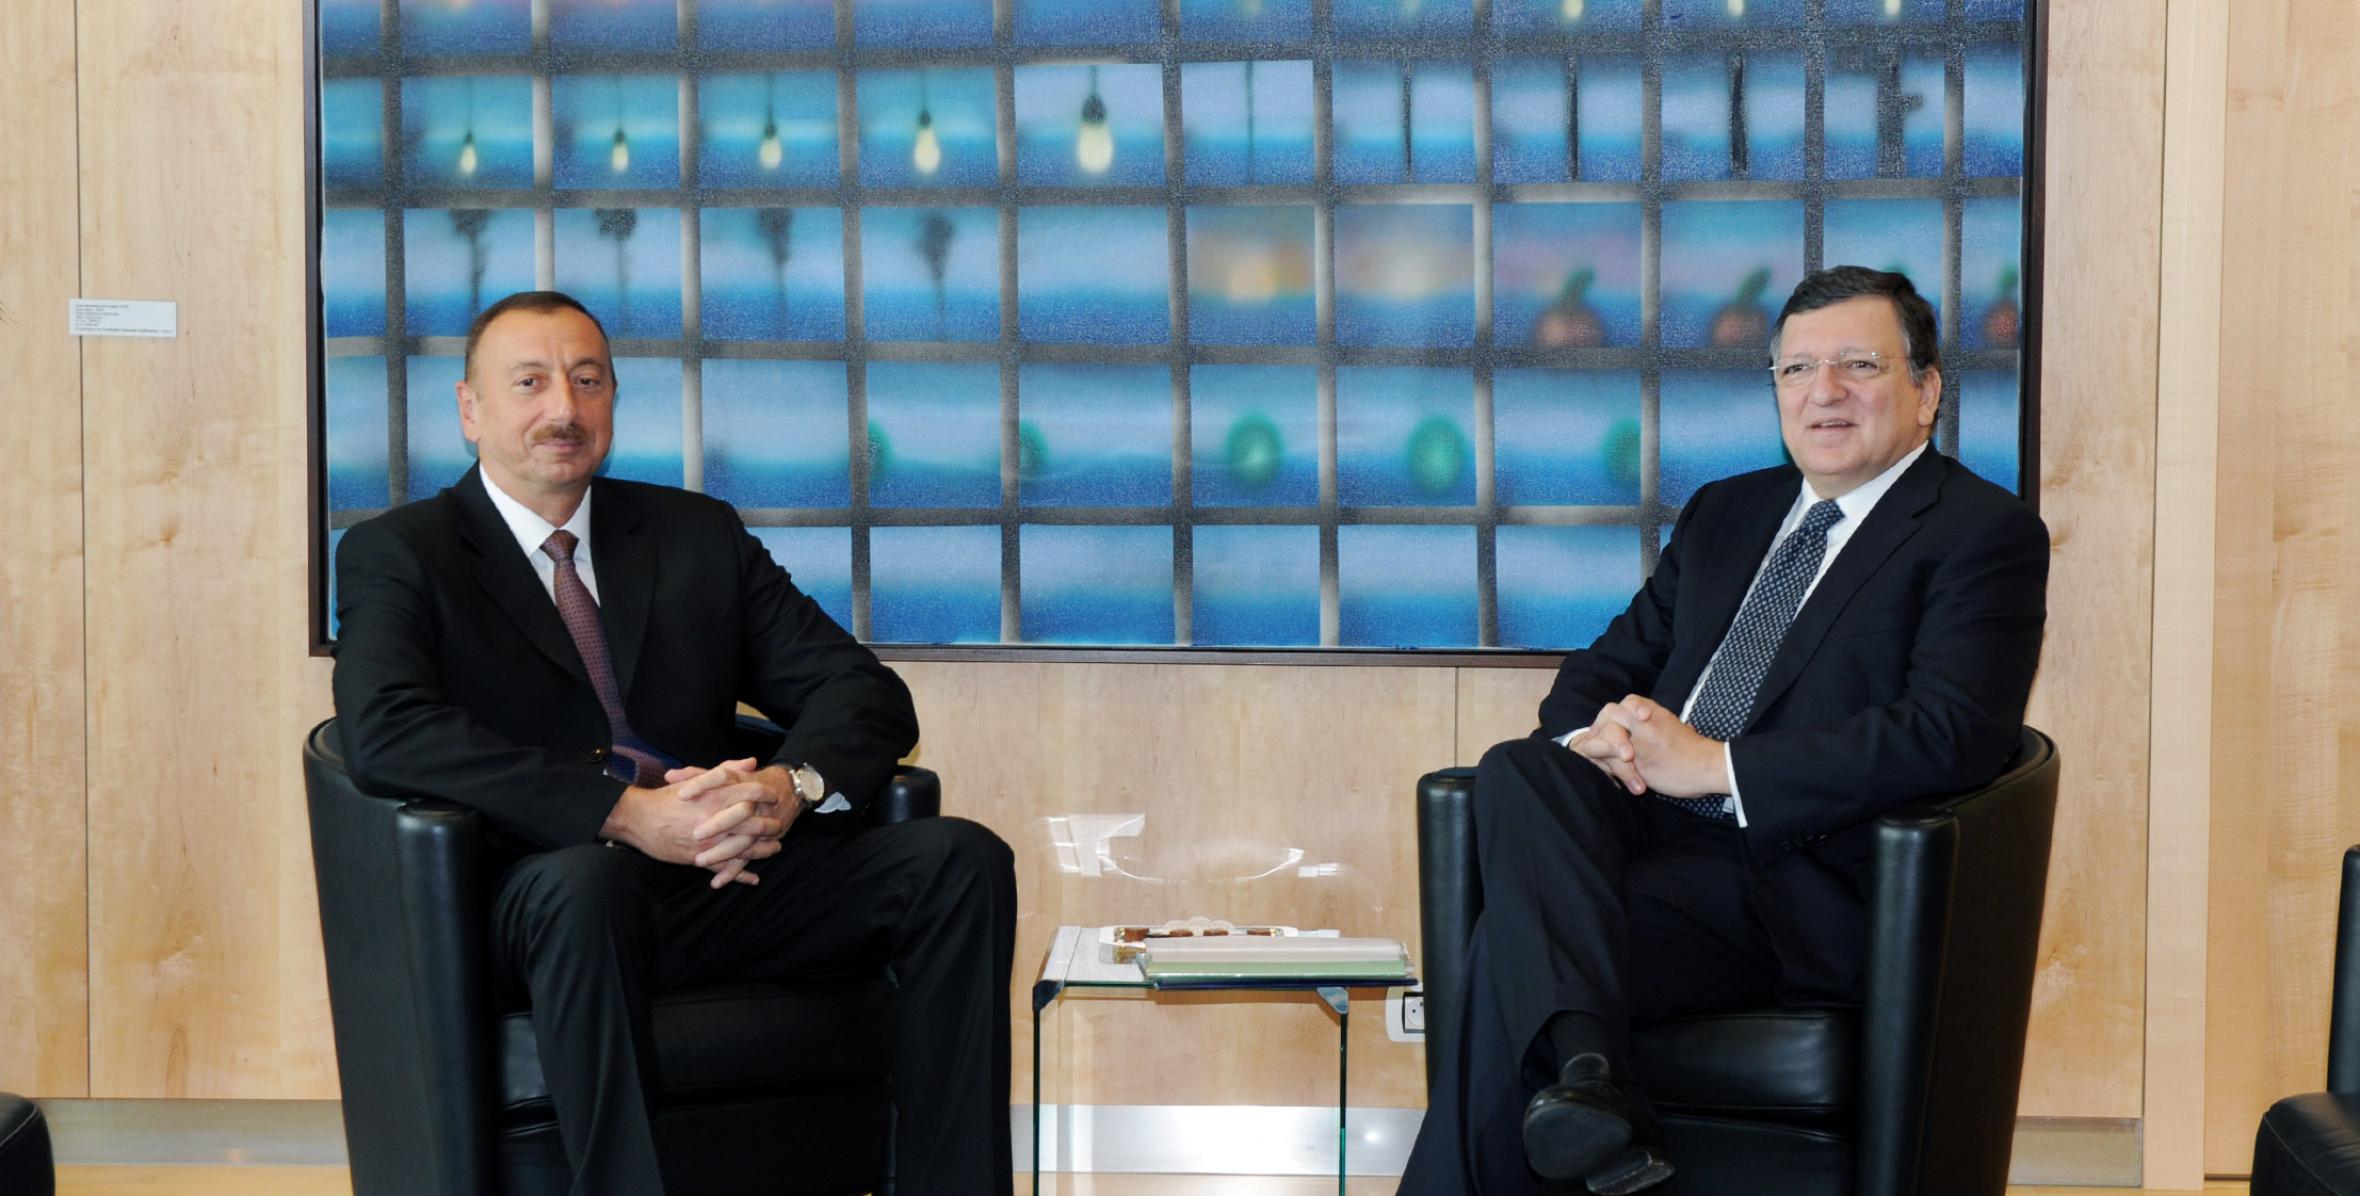 Ilham Aliyev met with European Commission President Jose Manuel Barroso